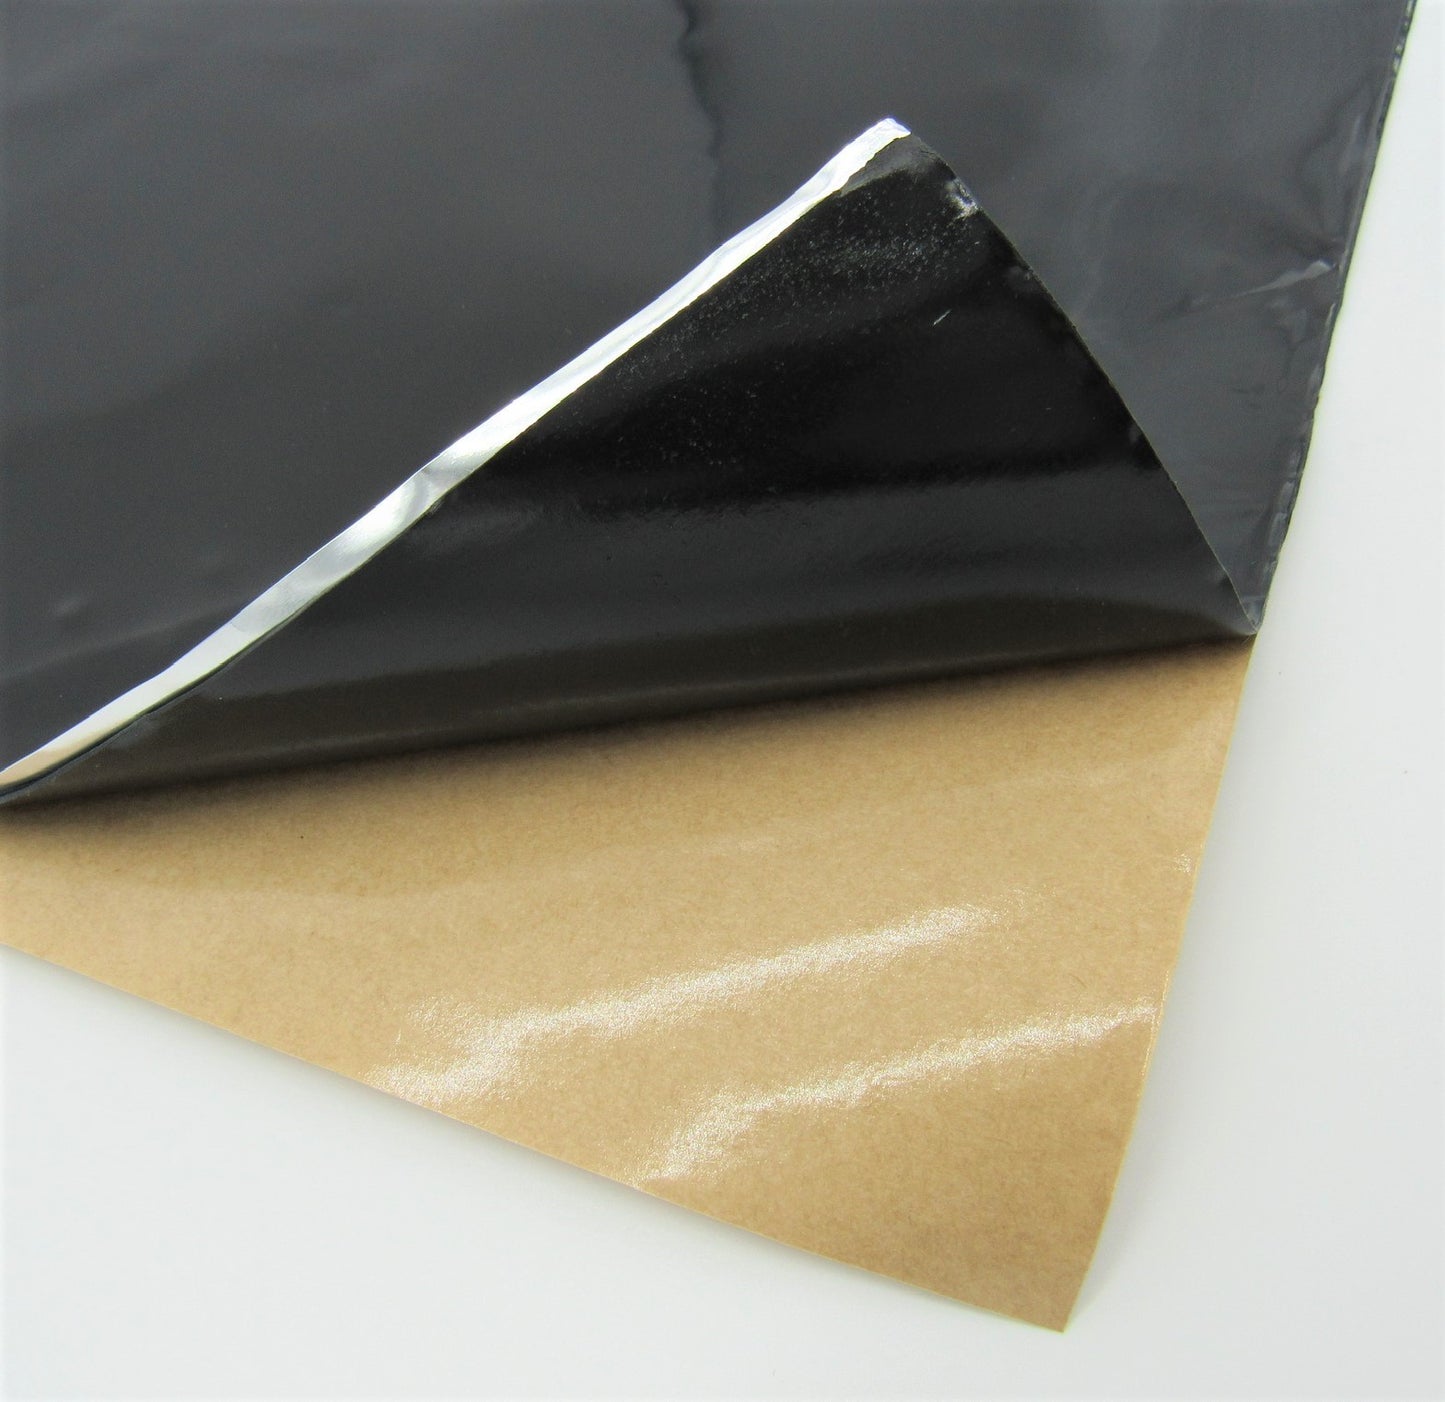 Hushmat Bulk Kit - Stealth Black Foil with Self-Adhesive Butyl-30 Sheets 12inx23in ea 58 sq ft 10500